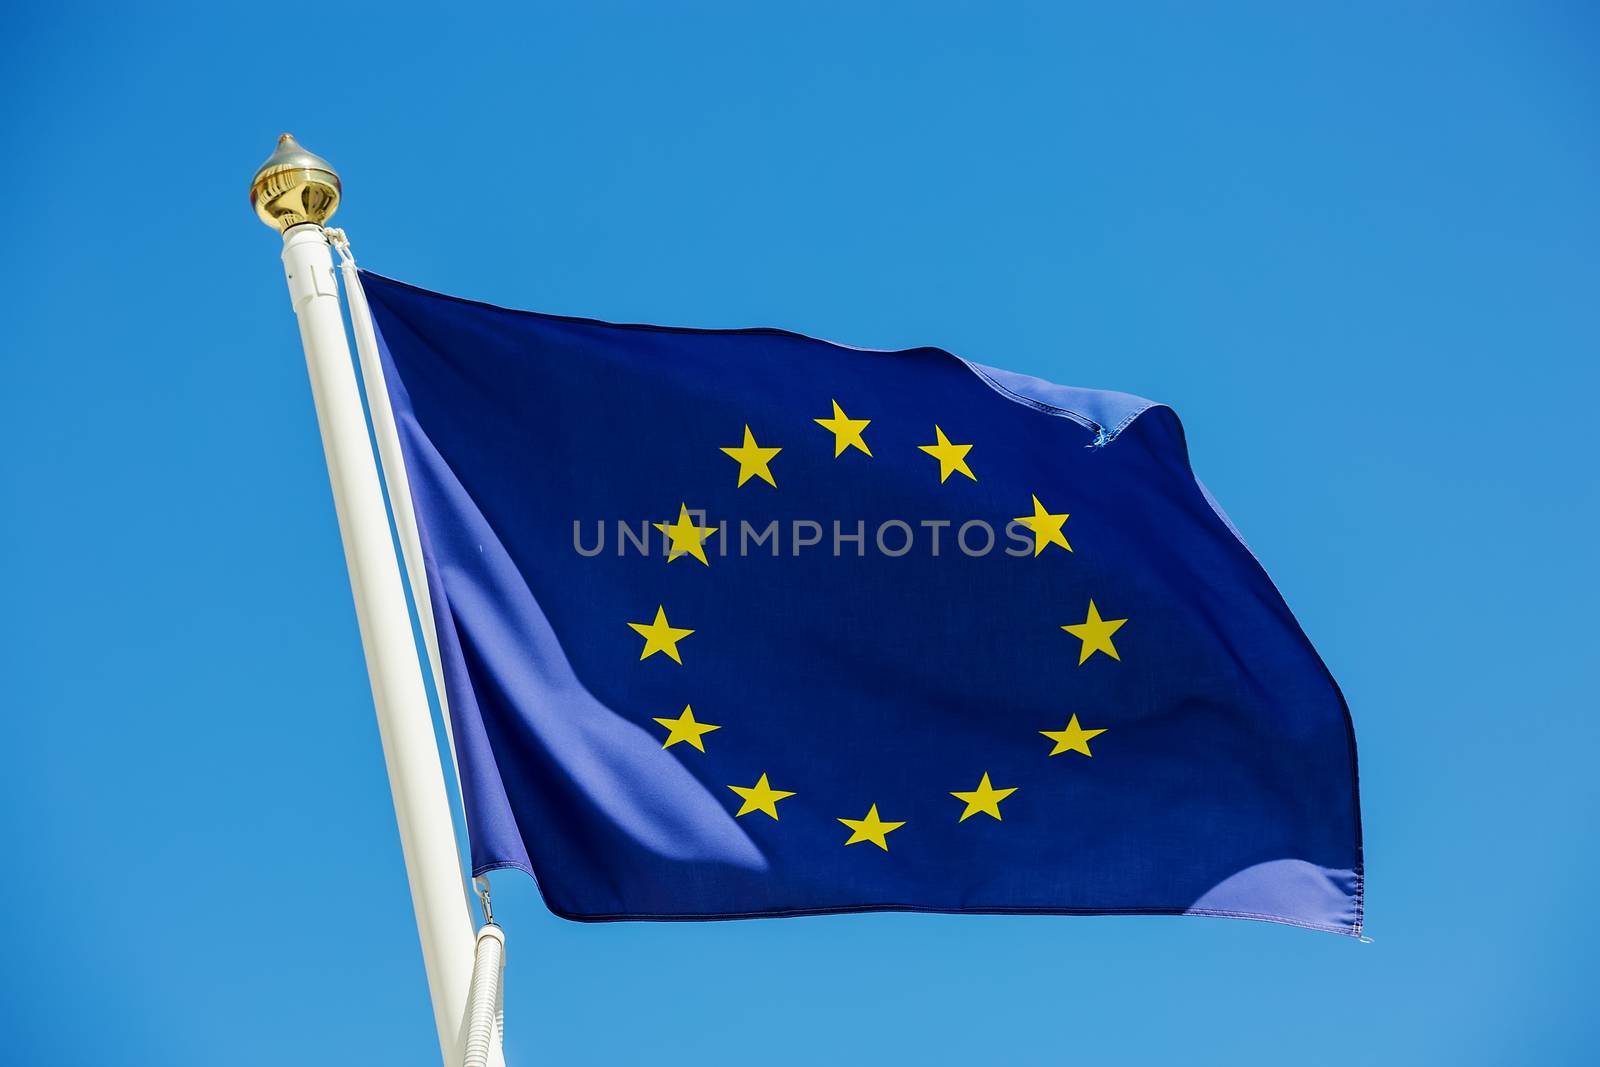 Standard waving flag of the European Union